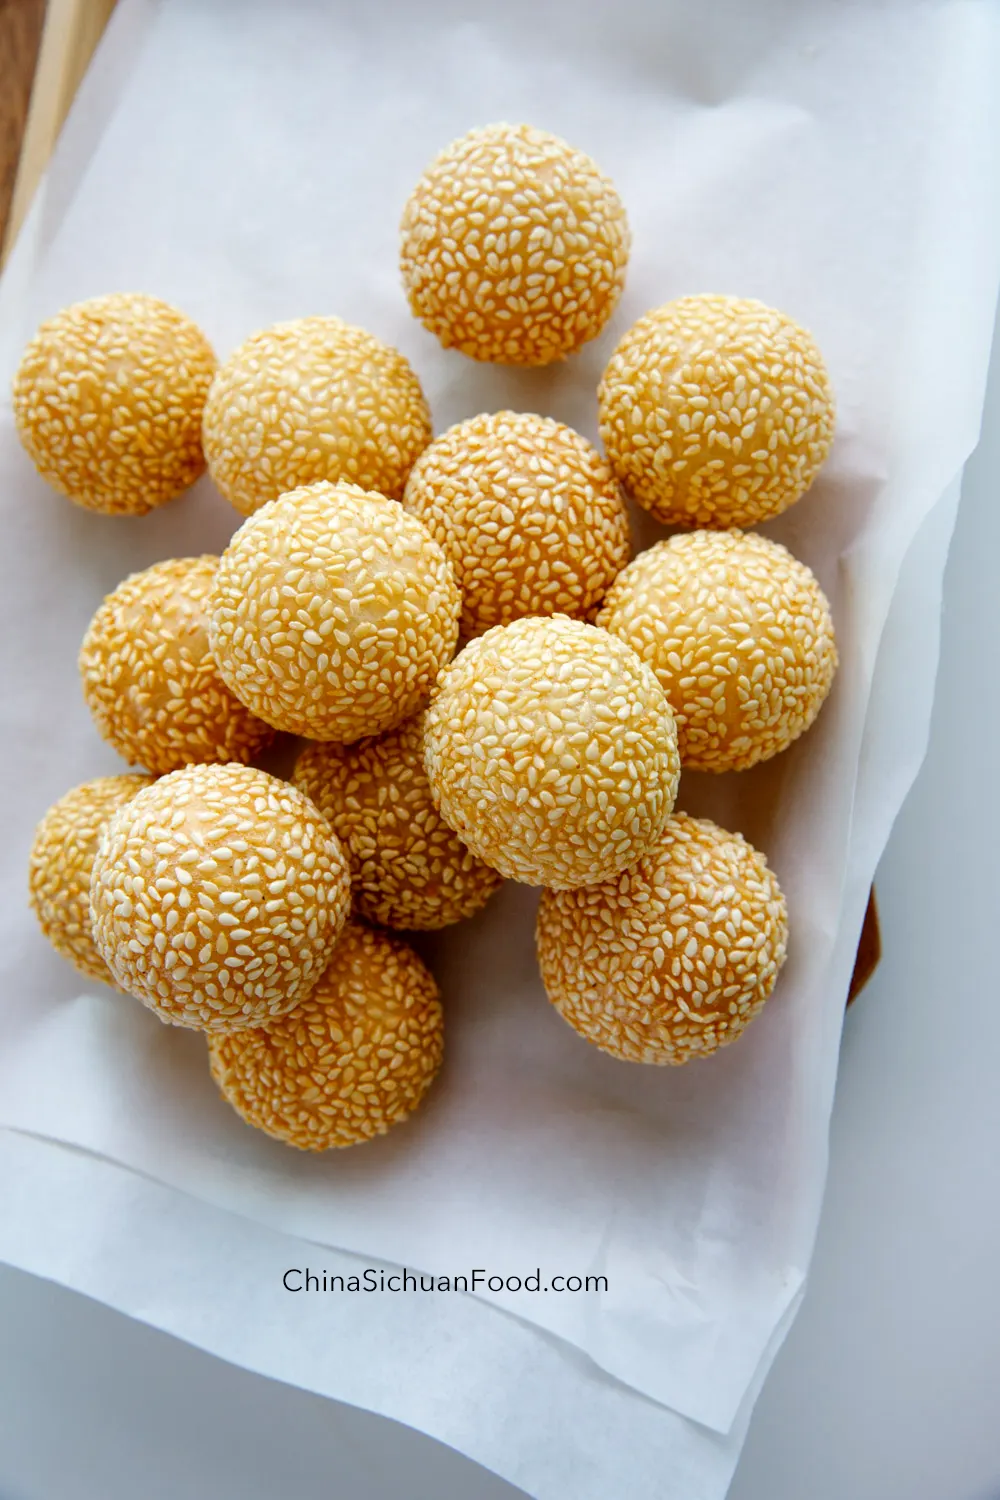 sesame balls|chinasichuanfood.com